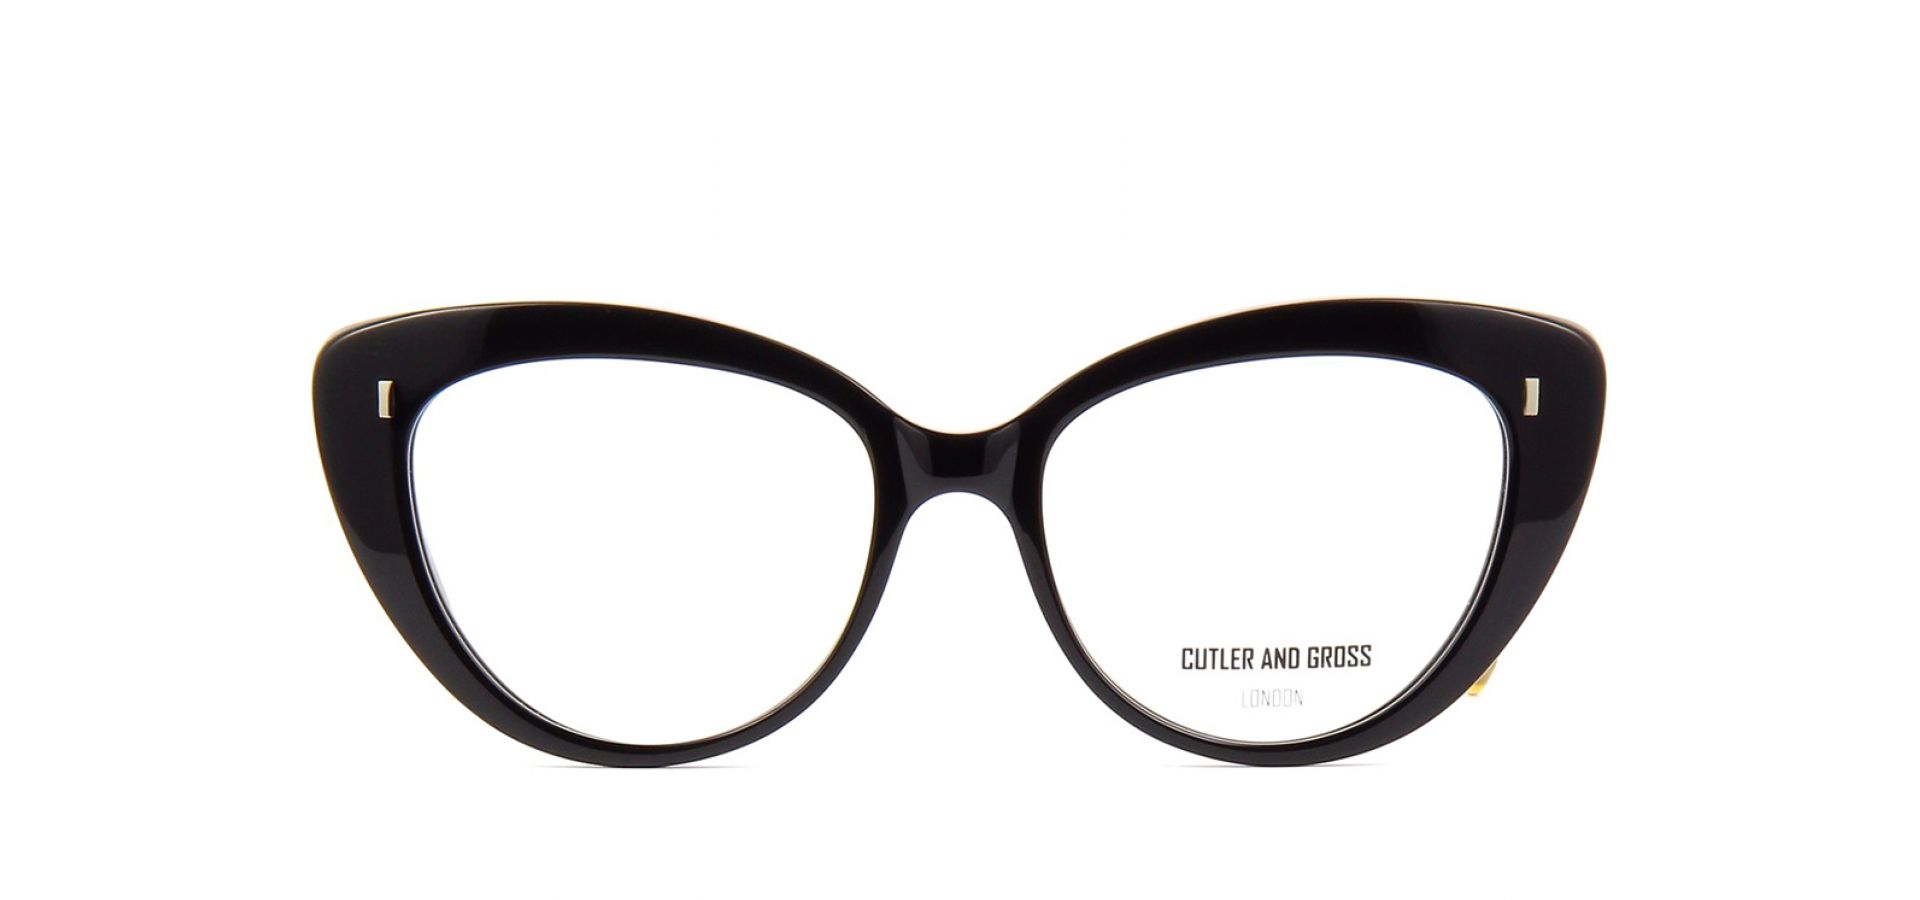 Korekcijska očala Cutler and Gross 1350-01: Velikost: 56/18/145, Spol: ženska, Material: acetat